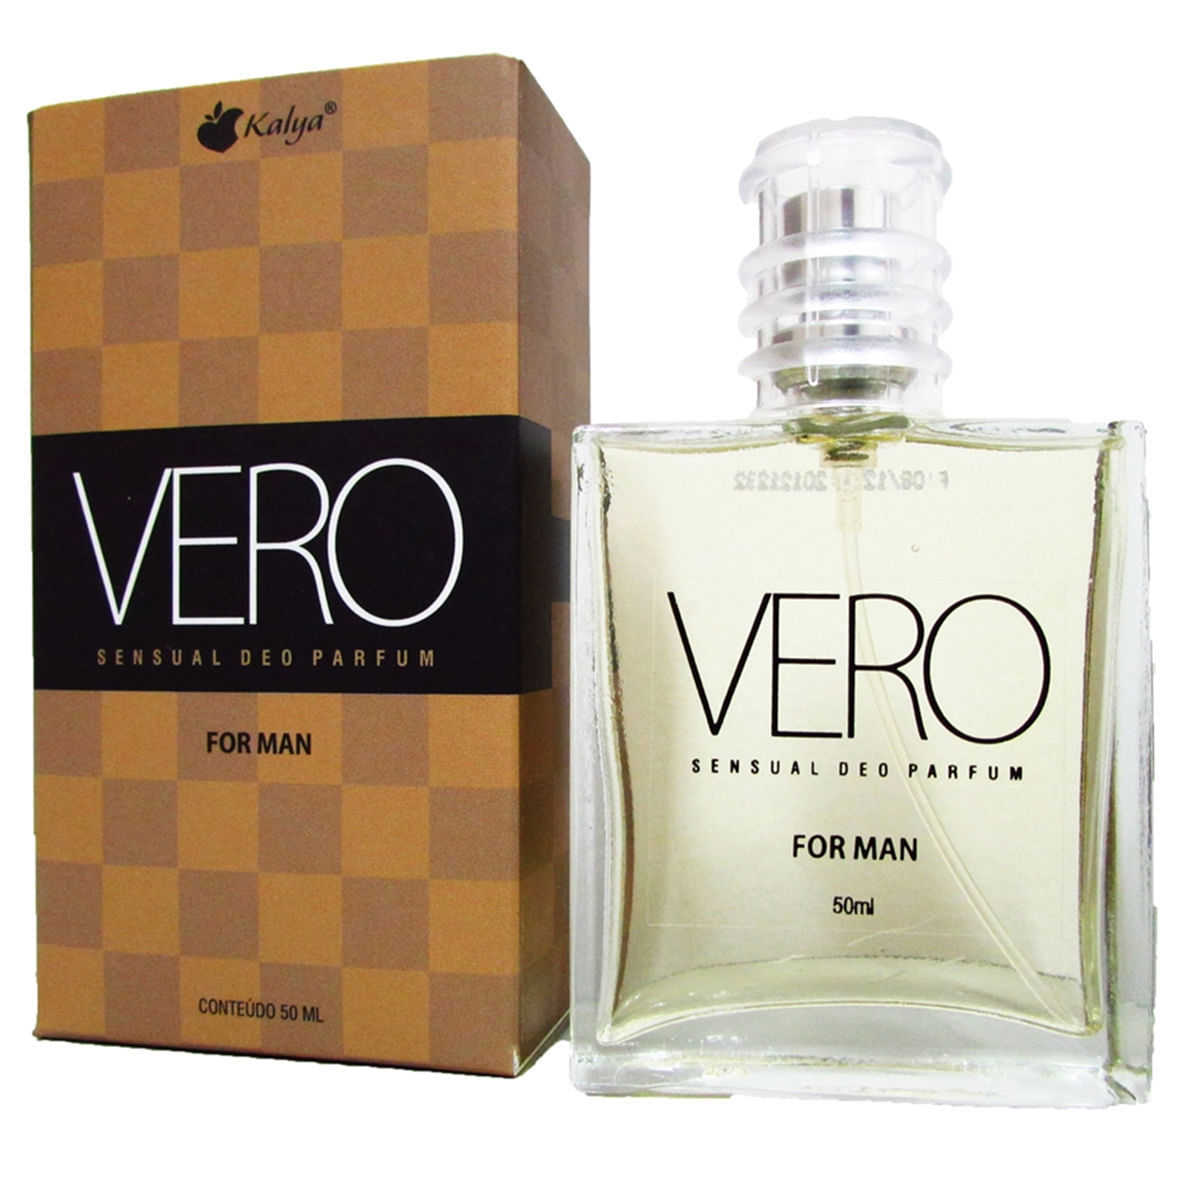 Vero Sensual Deo Parfum For Man 50ml Kayla